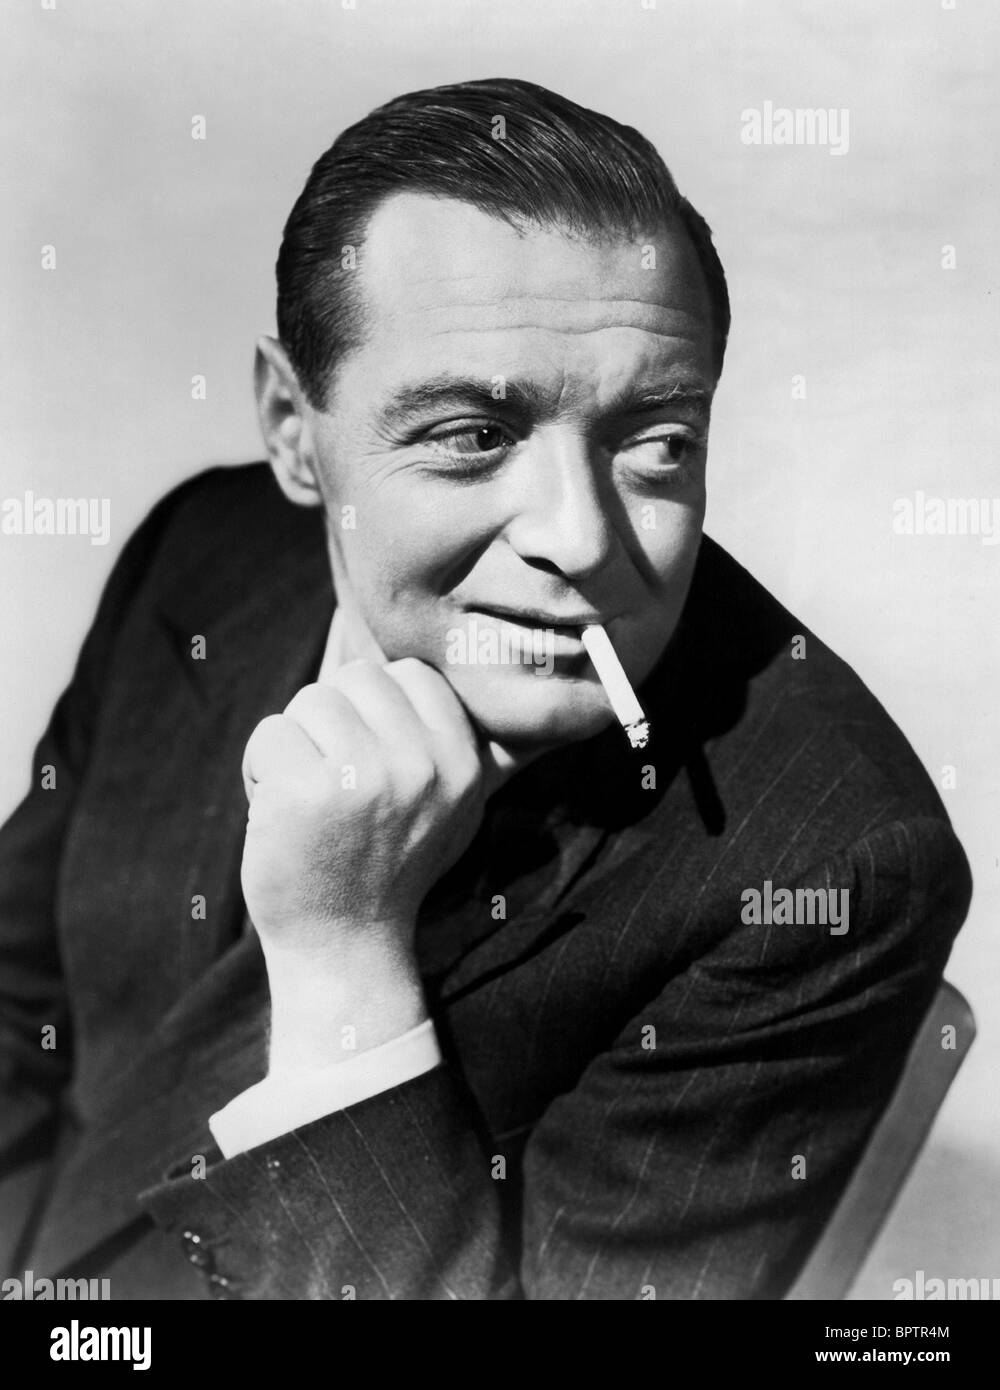 PETER LORRE ACTOR (1950 Stock Photo - Alamy